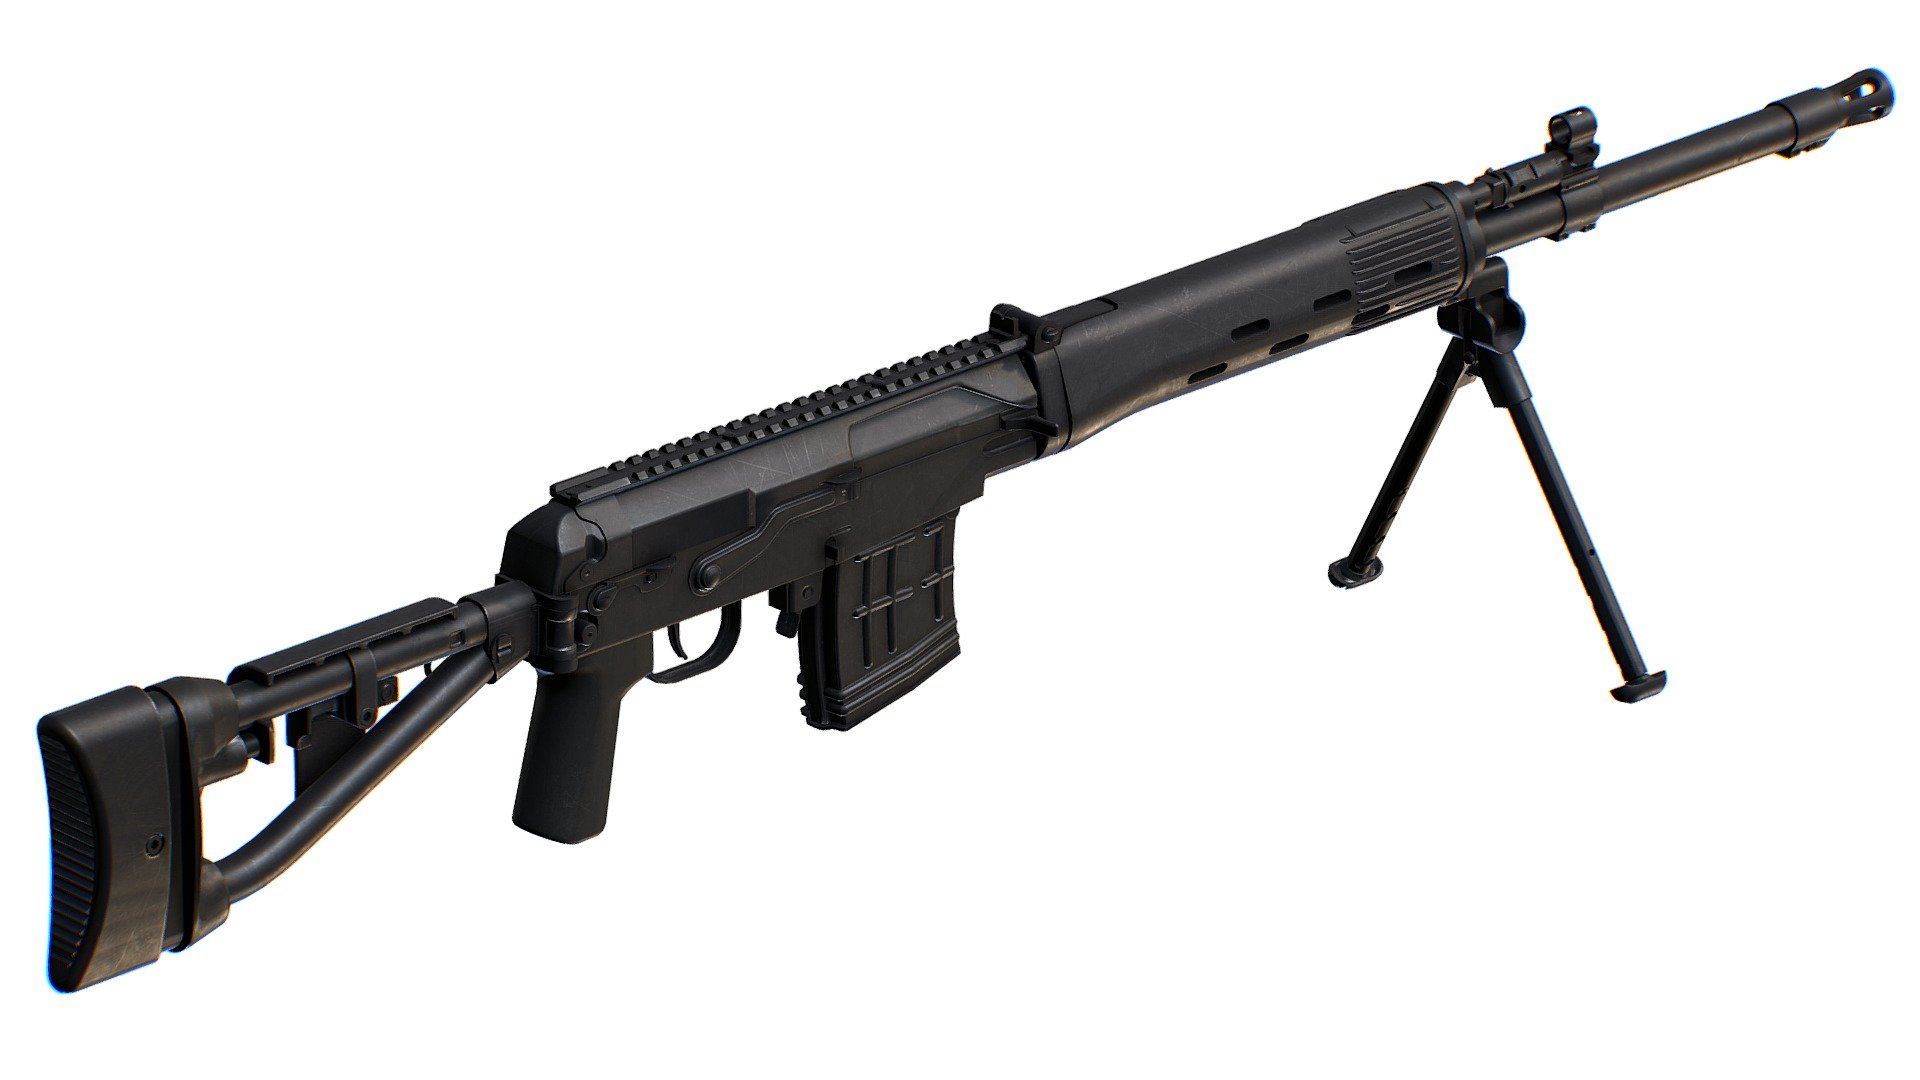 Russian Dragun Sniper Rifle SVDM LowPoly model -4096x4096 textures, 3dsMaya file included 3d model